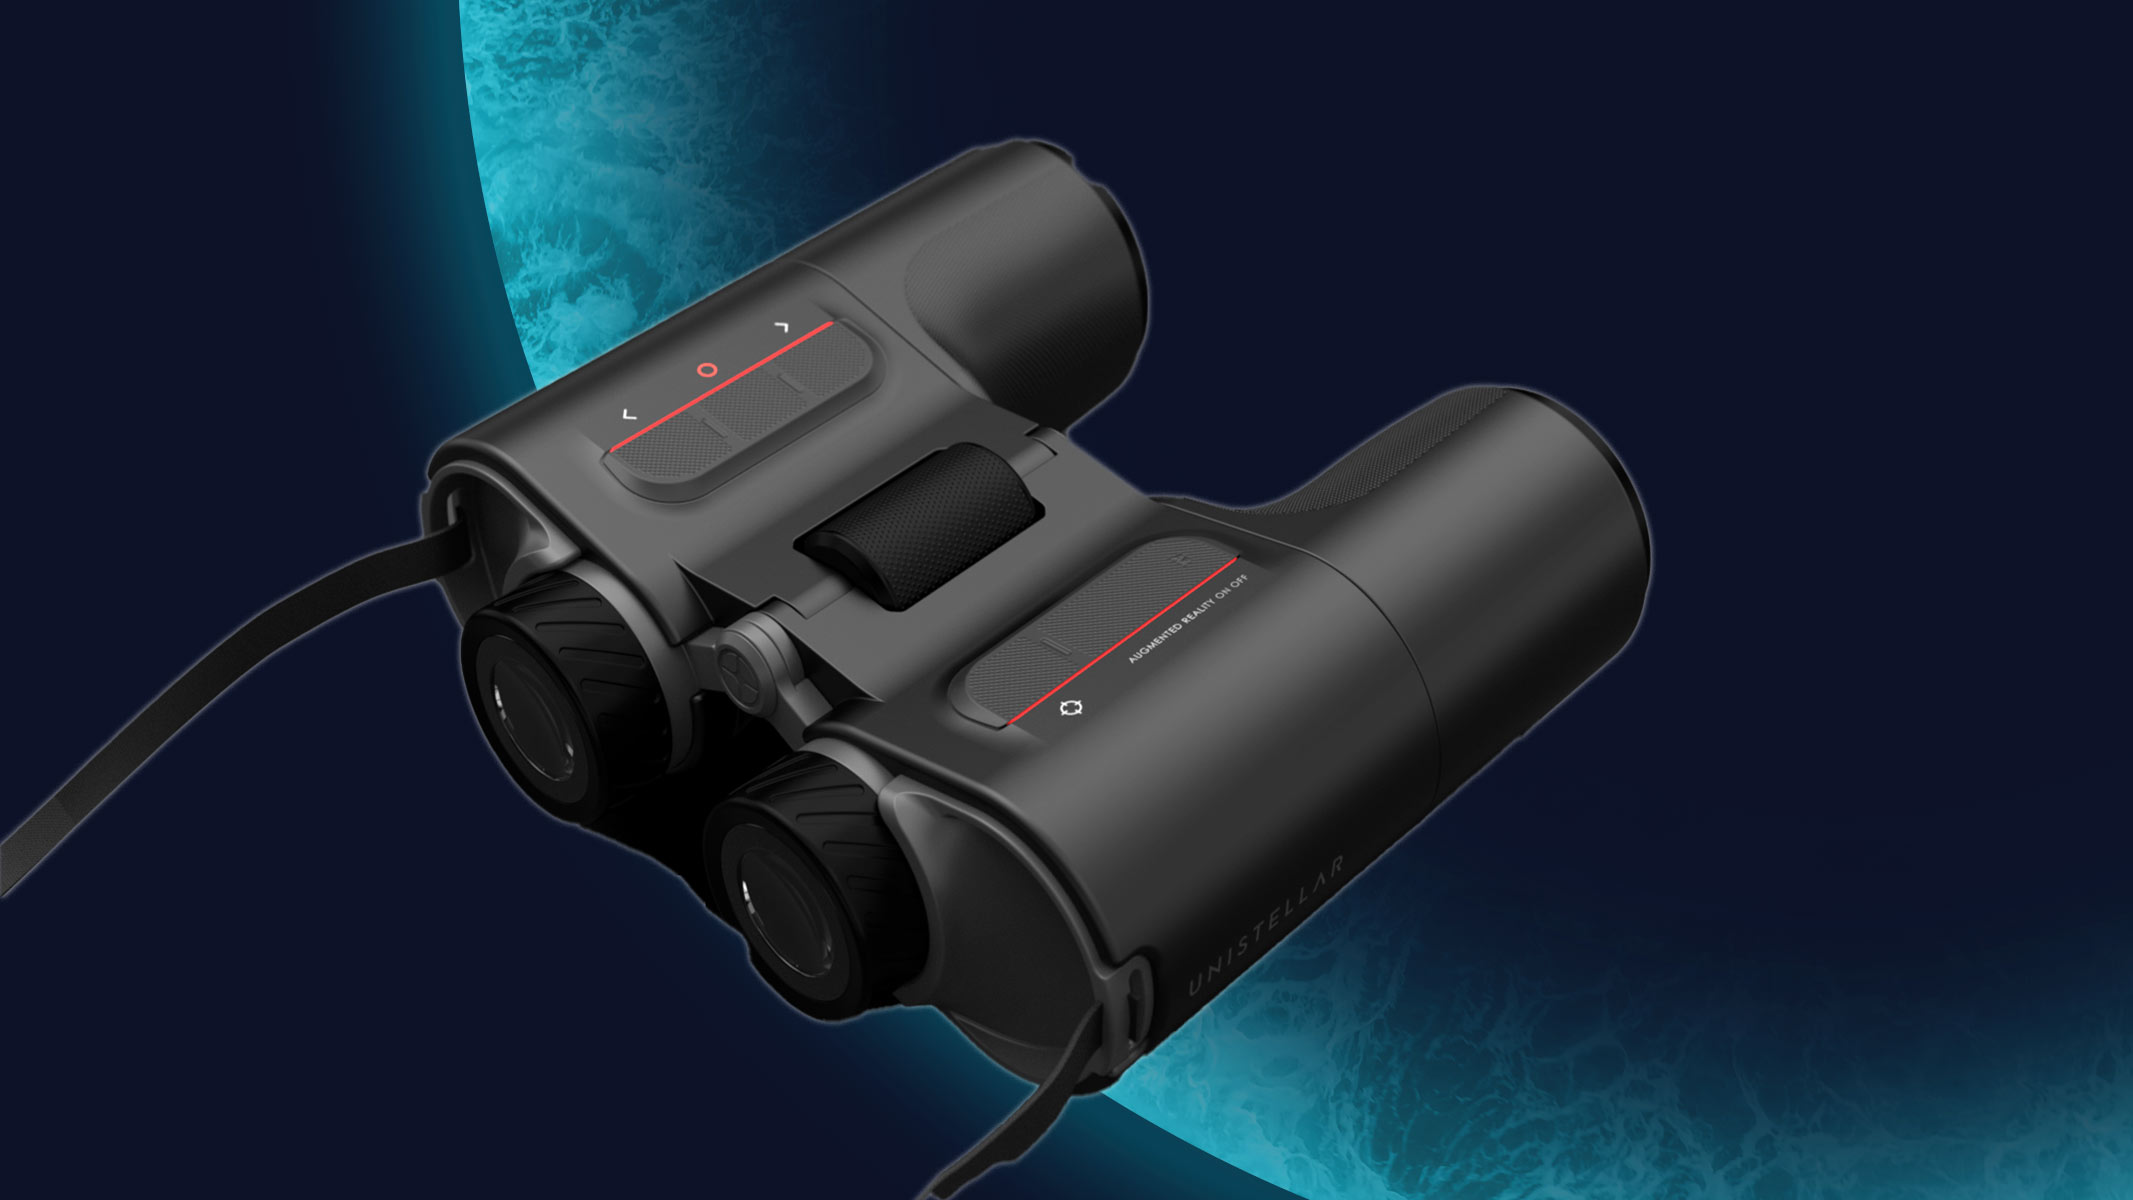 Save $400 on Unistellar smart binoculars: Early bird deal Space